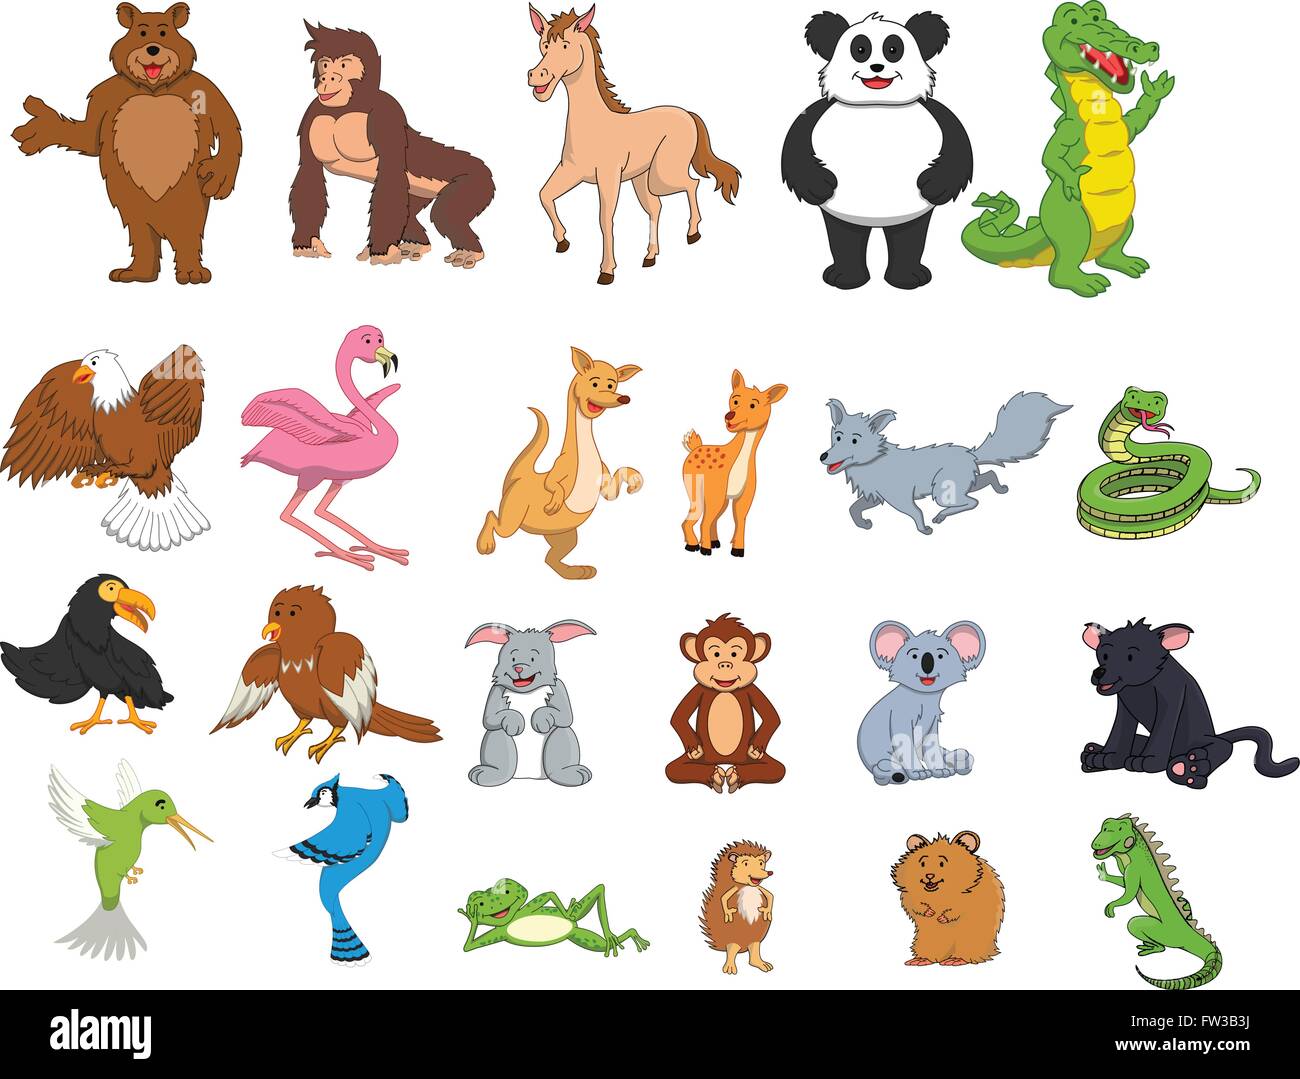 Jungle animal cartoon illustration Stock Vector Image & Art - Alamy